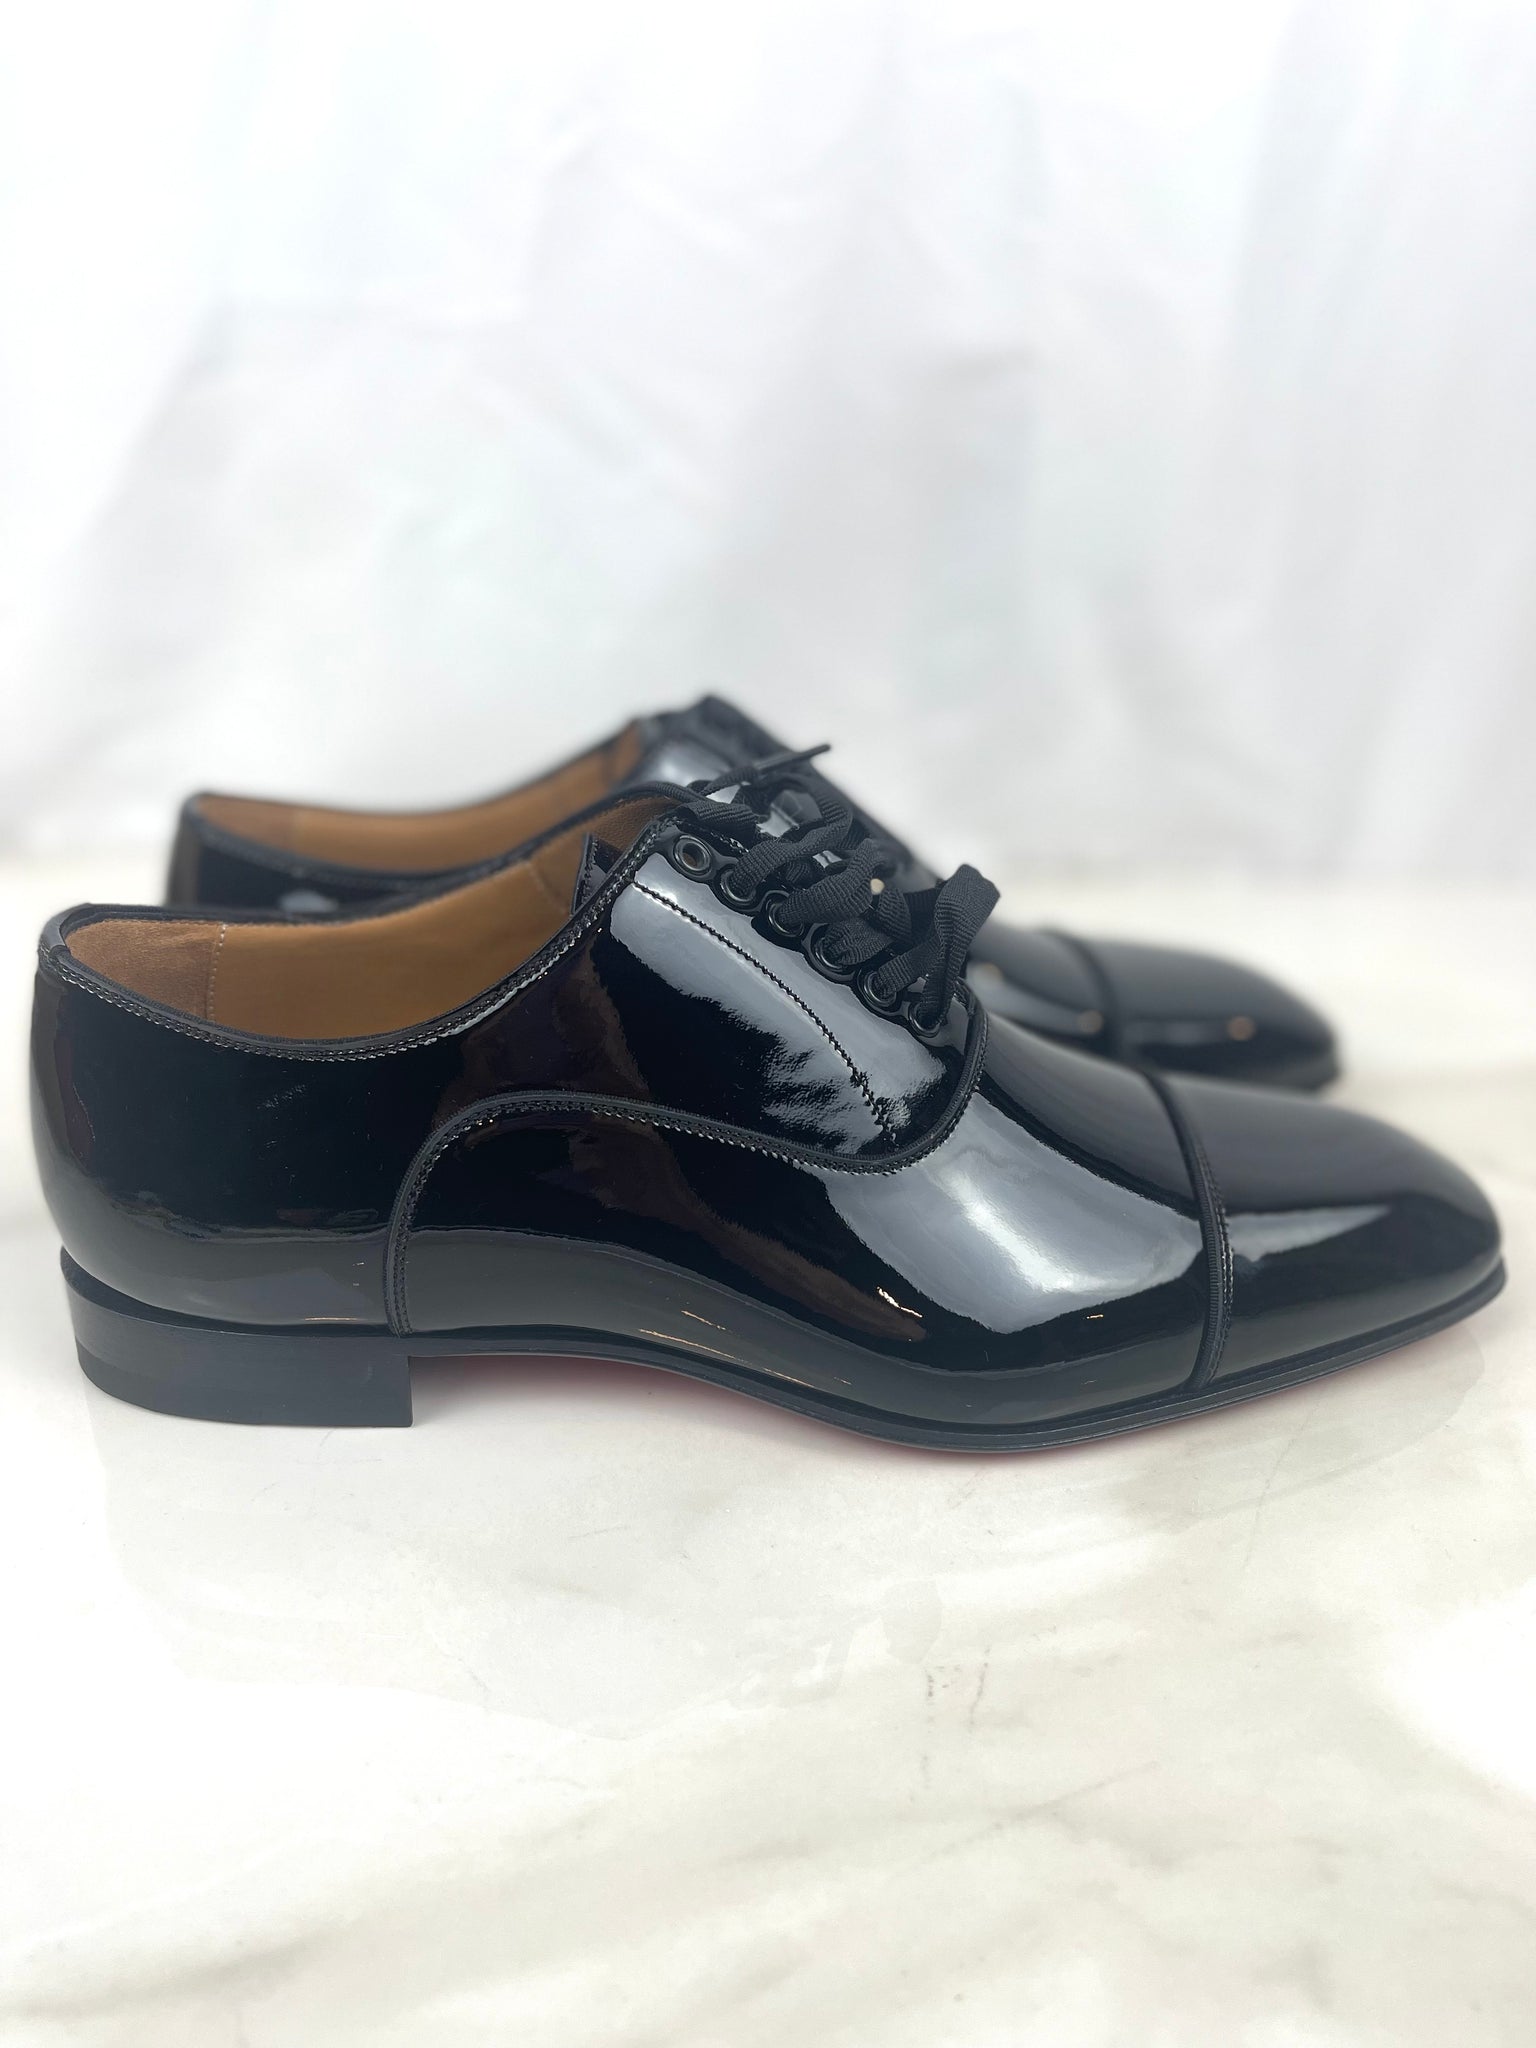 Christian Louboutin Black Leather Greggo Lace-Up Shoes